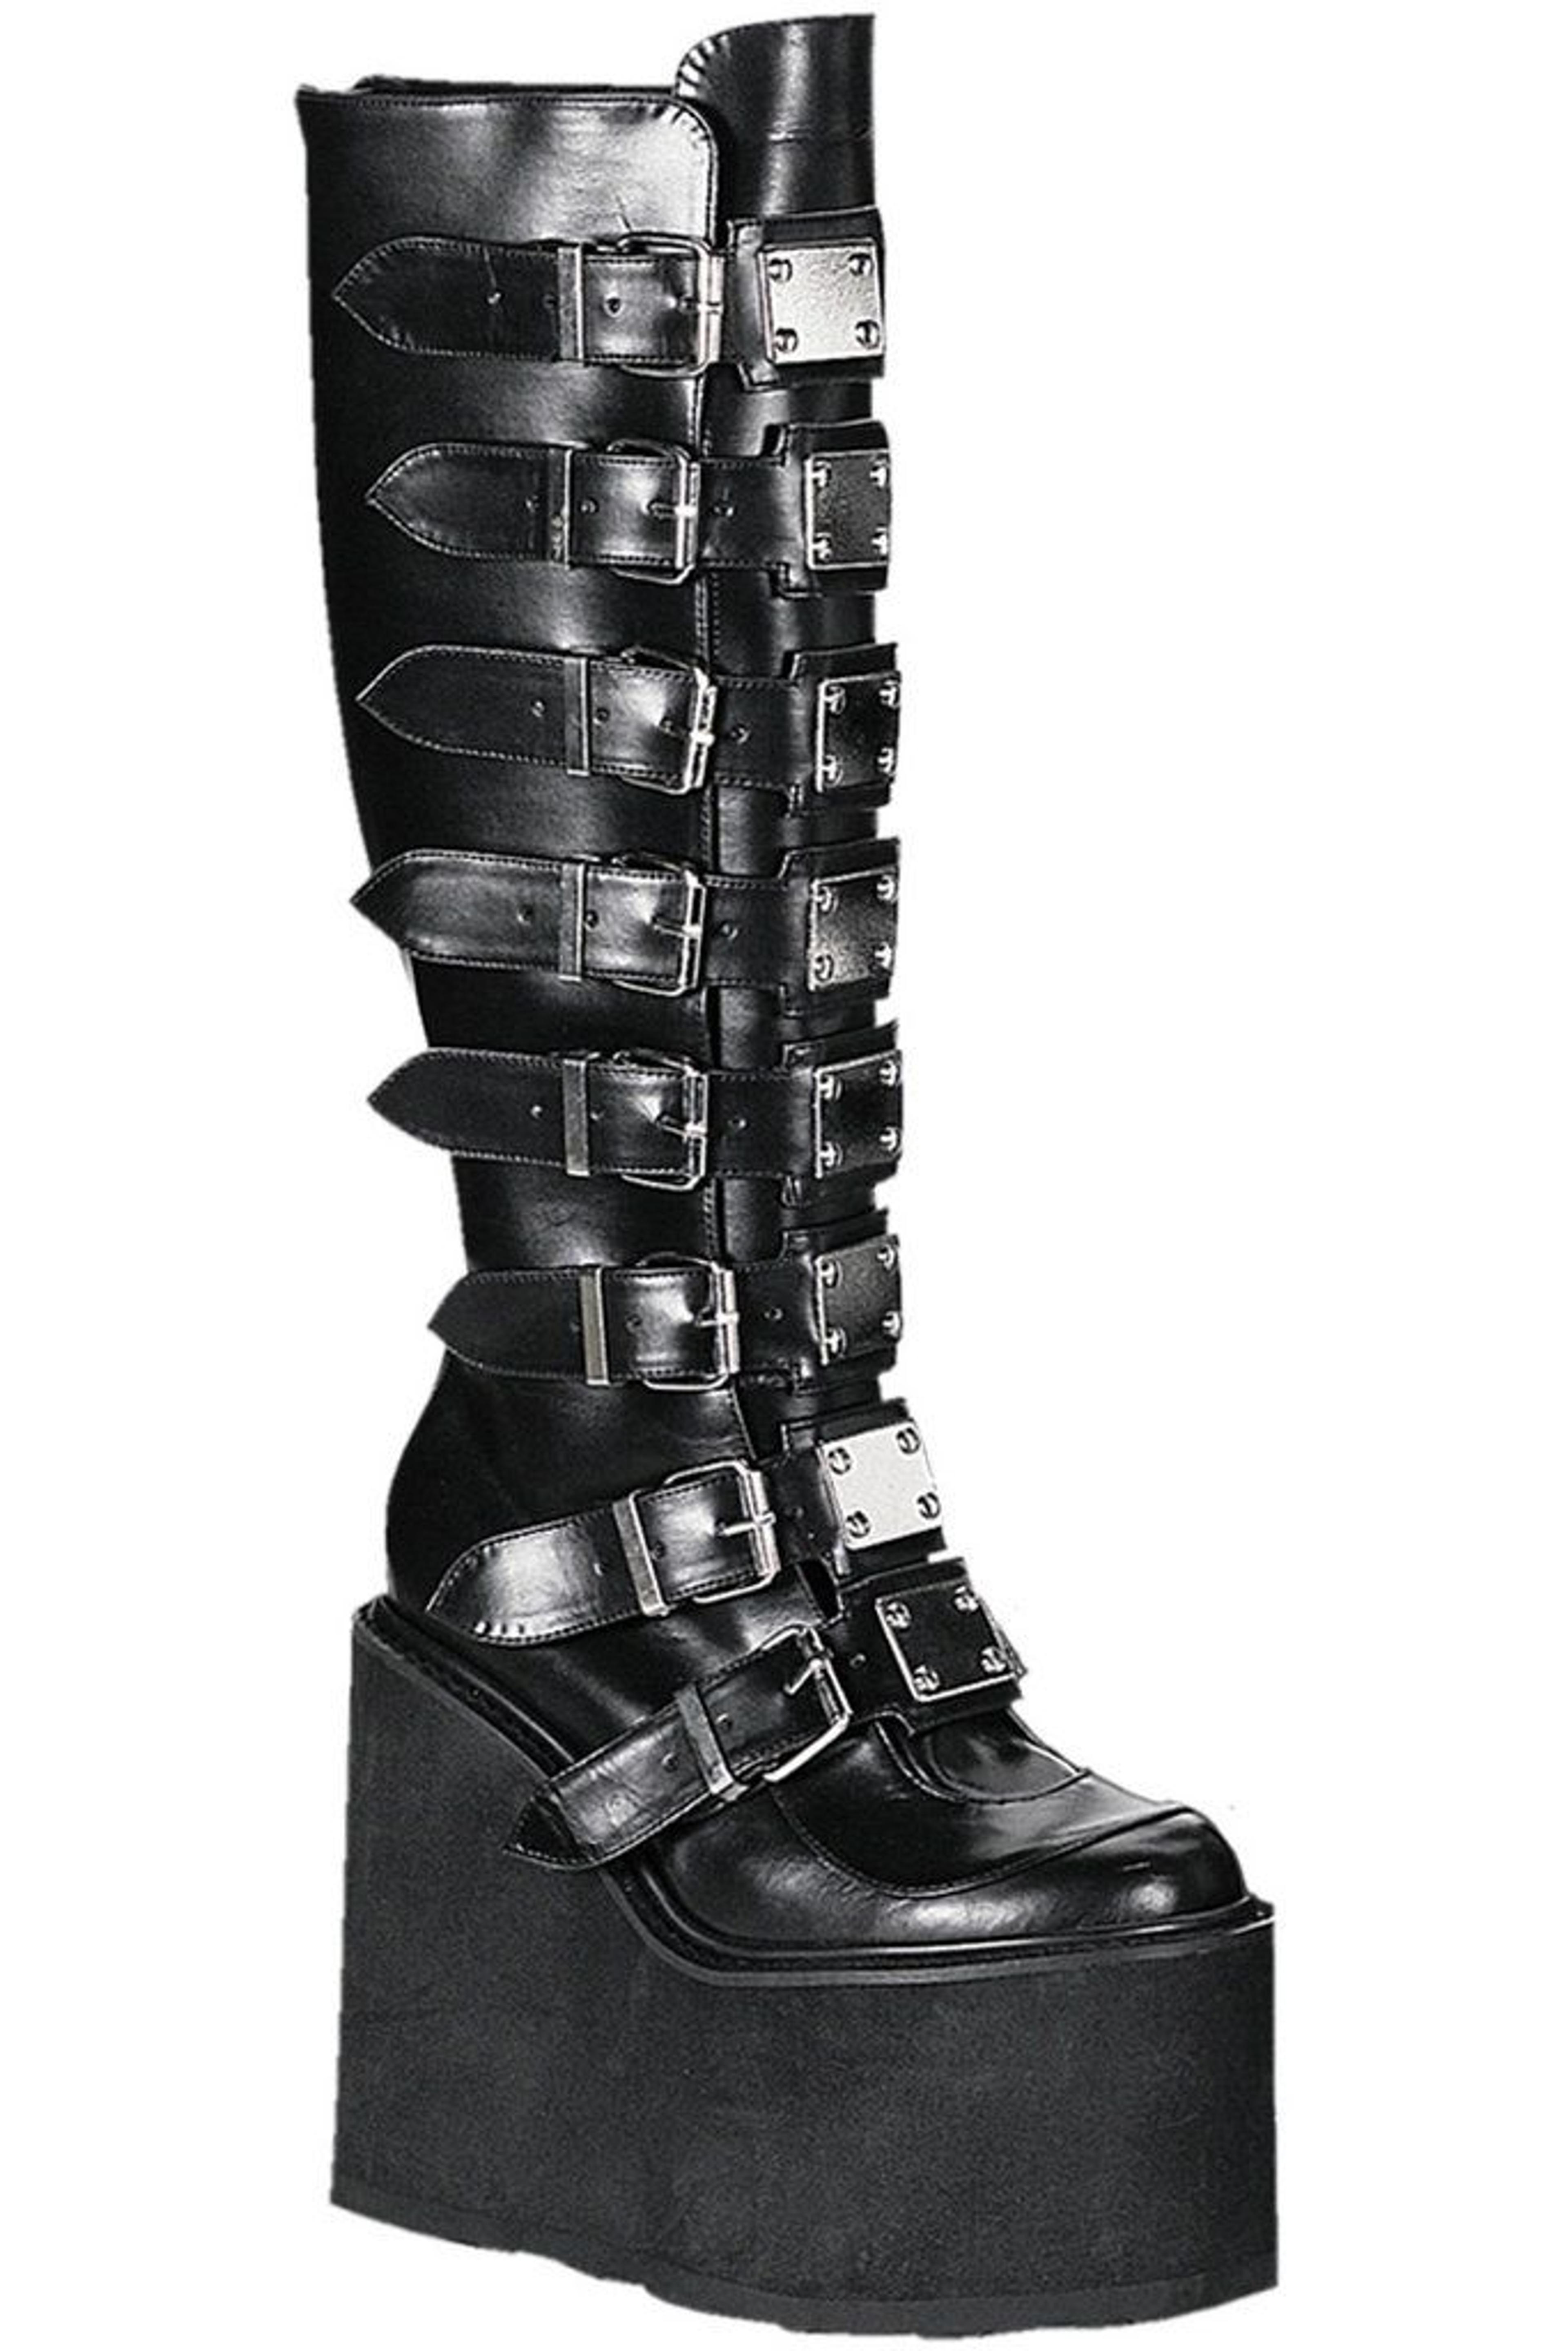 Demonia Swing 815 Goth Boots - Black Vegan Leather - 8